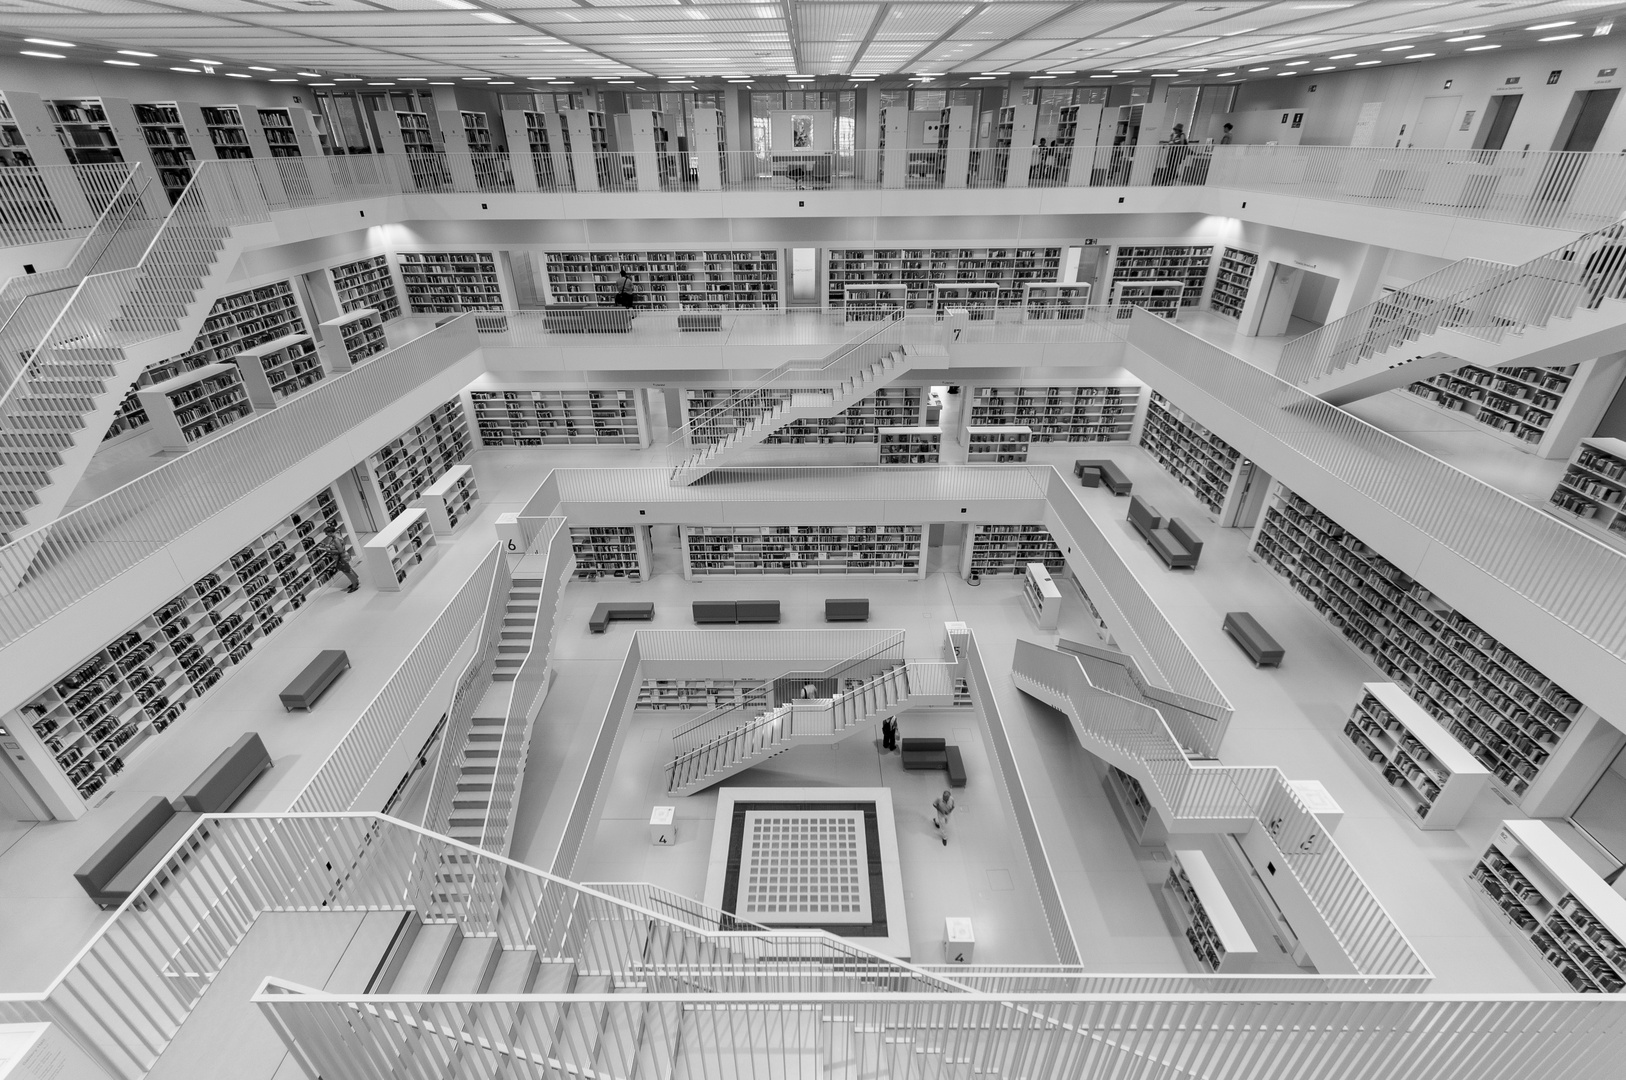 Bibliothek Stuttgart s/w